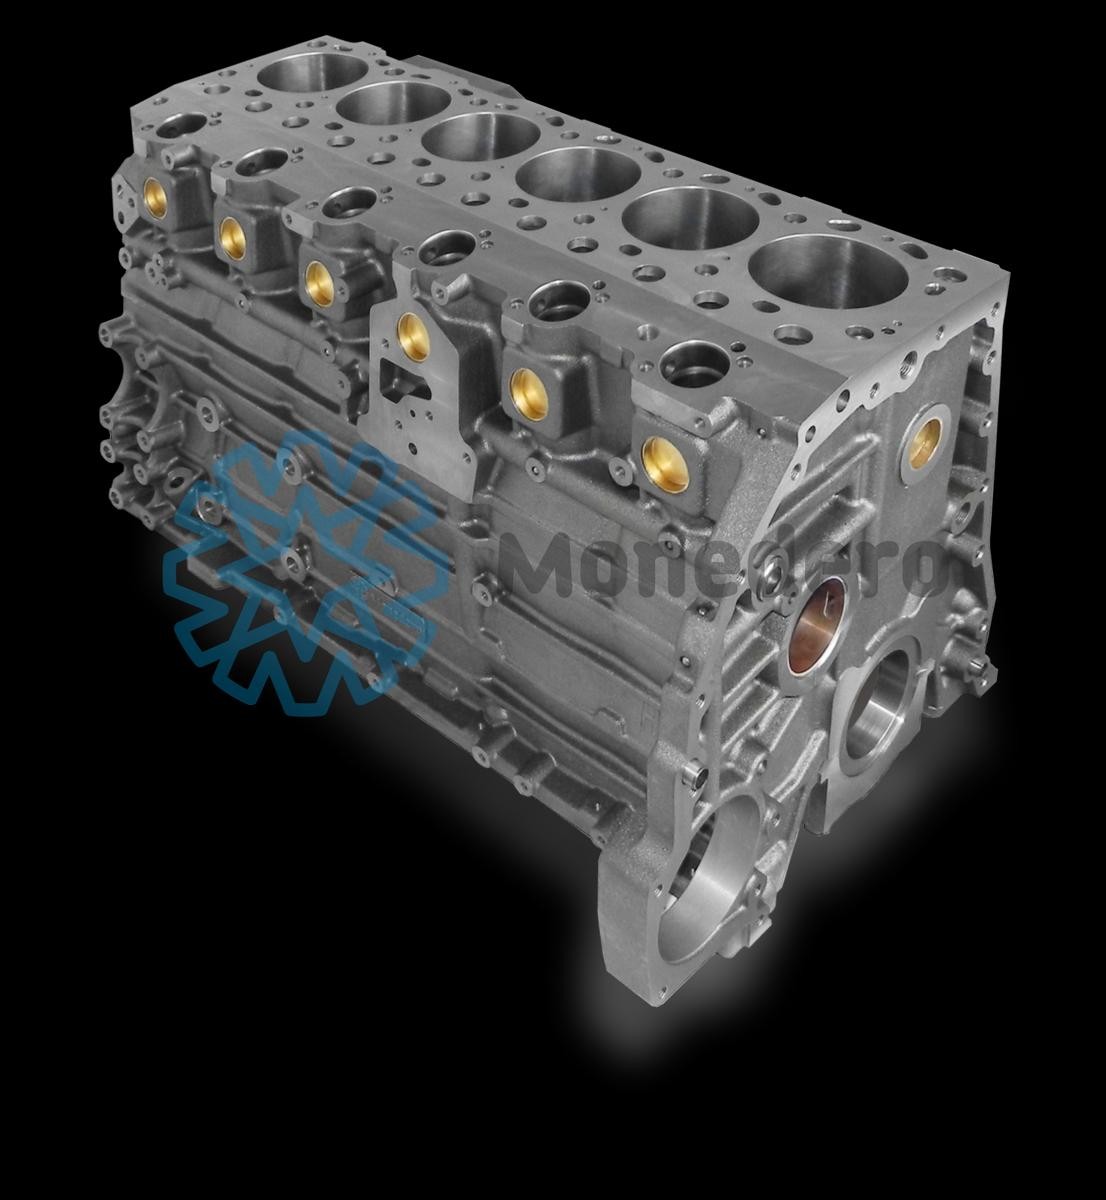 MONEDERO 10010000013 Engine block Cast Iron